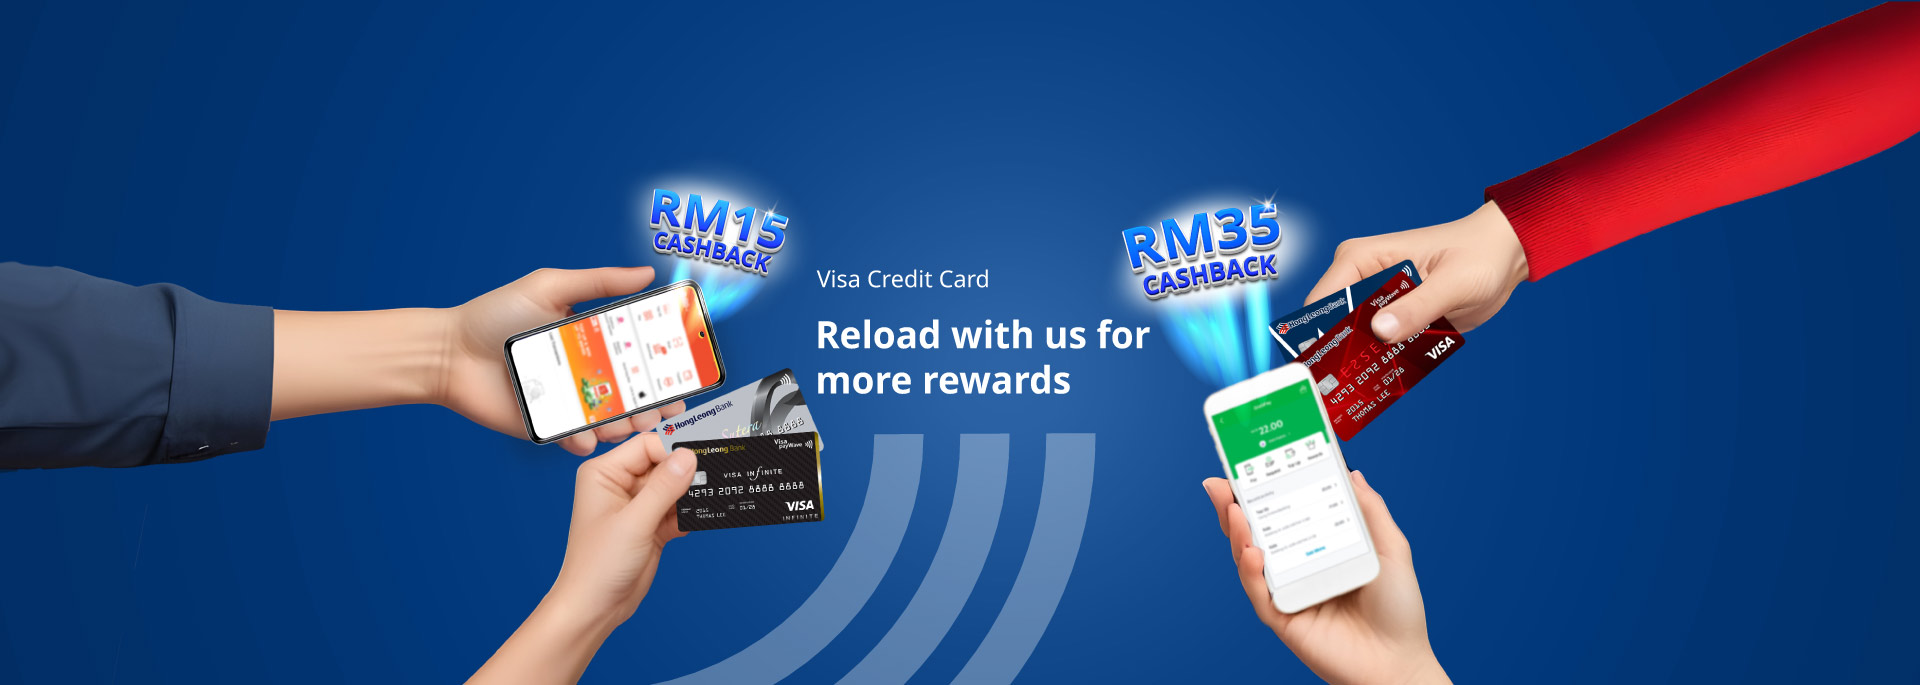 Credit Card Reload Campaign